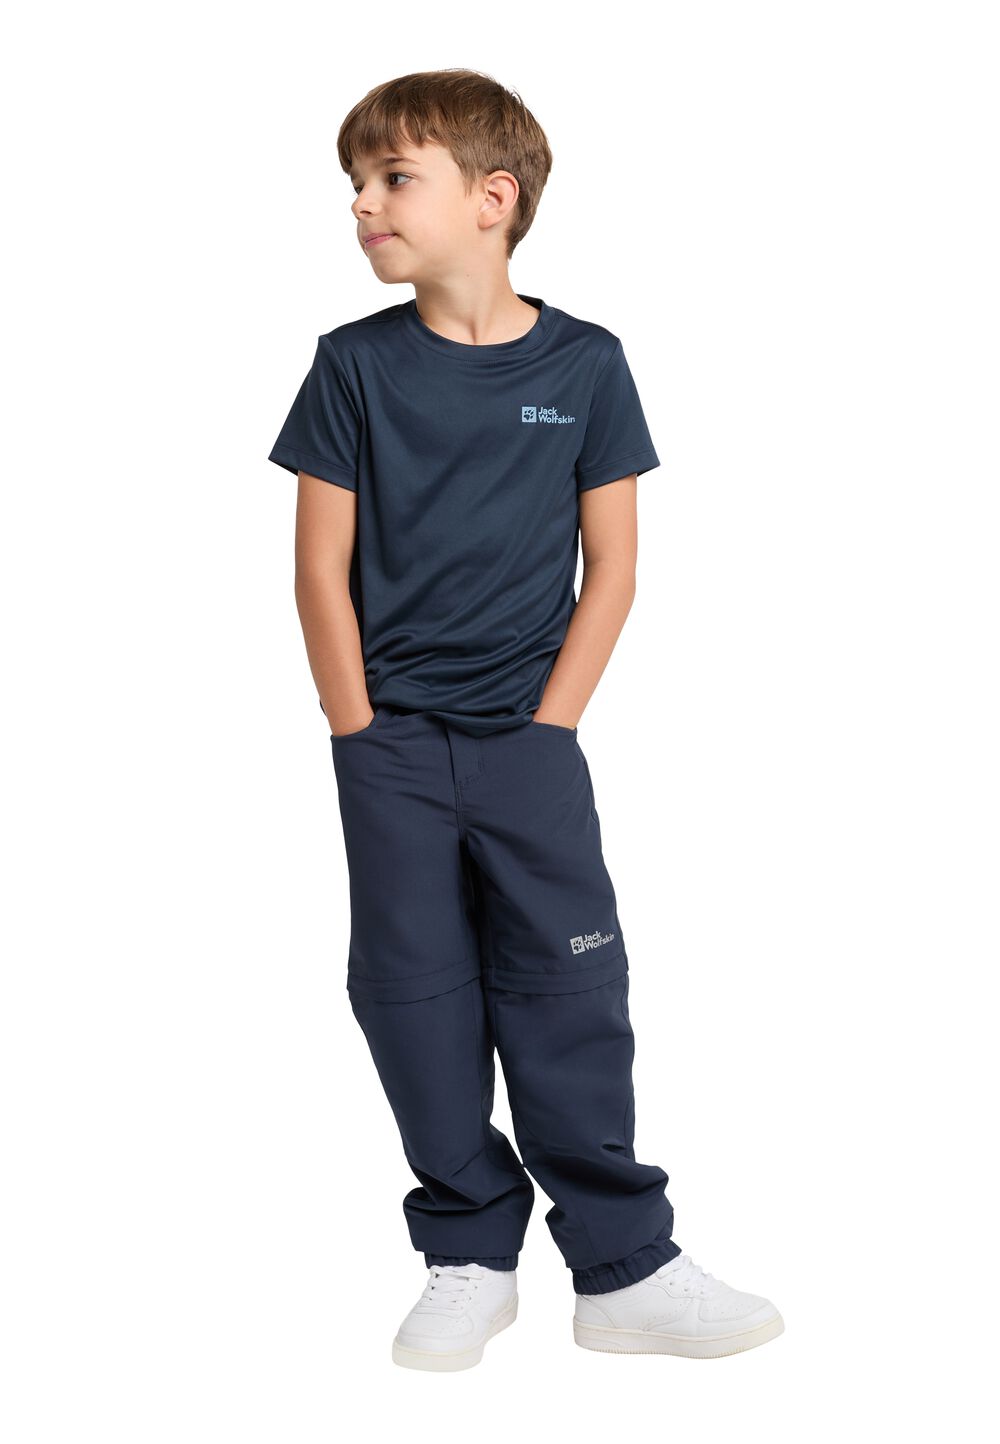 Jack Wolfskin Active Solid T-Shirt Kids Functioneel shirt Kinderen 116 blue night blue